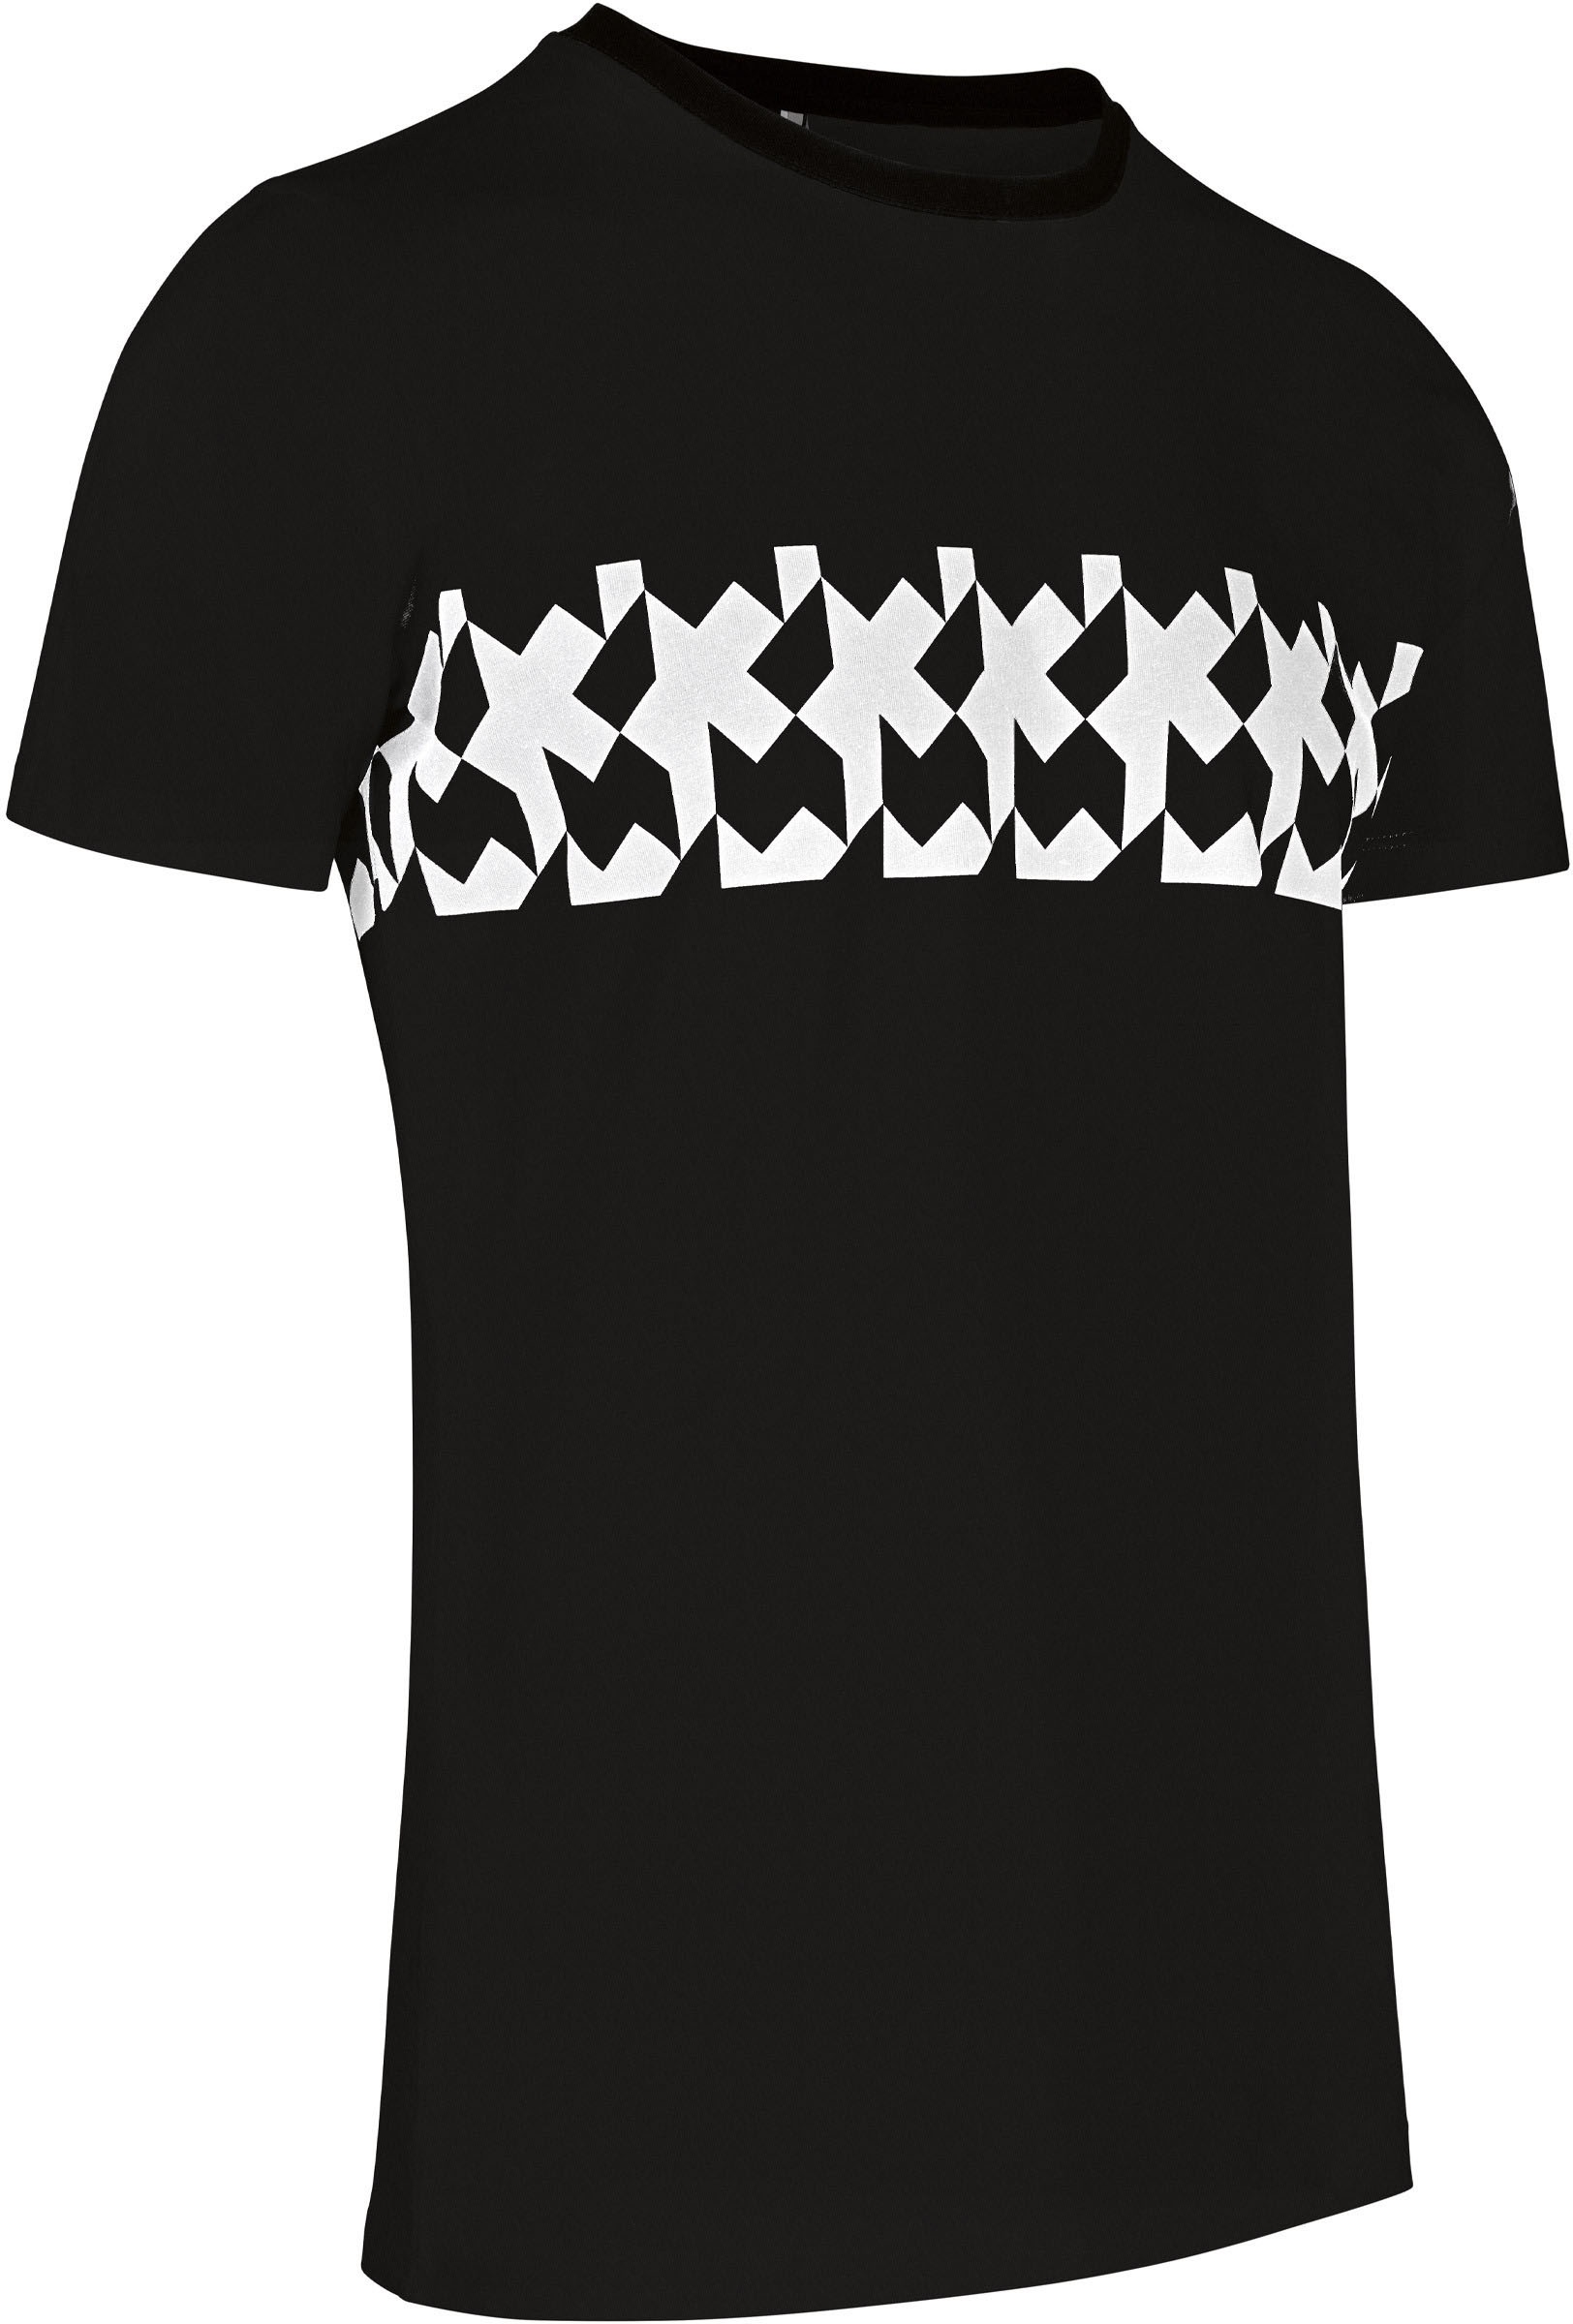 Assos SIGNATURE Summer T-Shirt RS Griffe - Sort